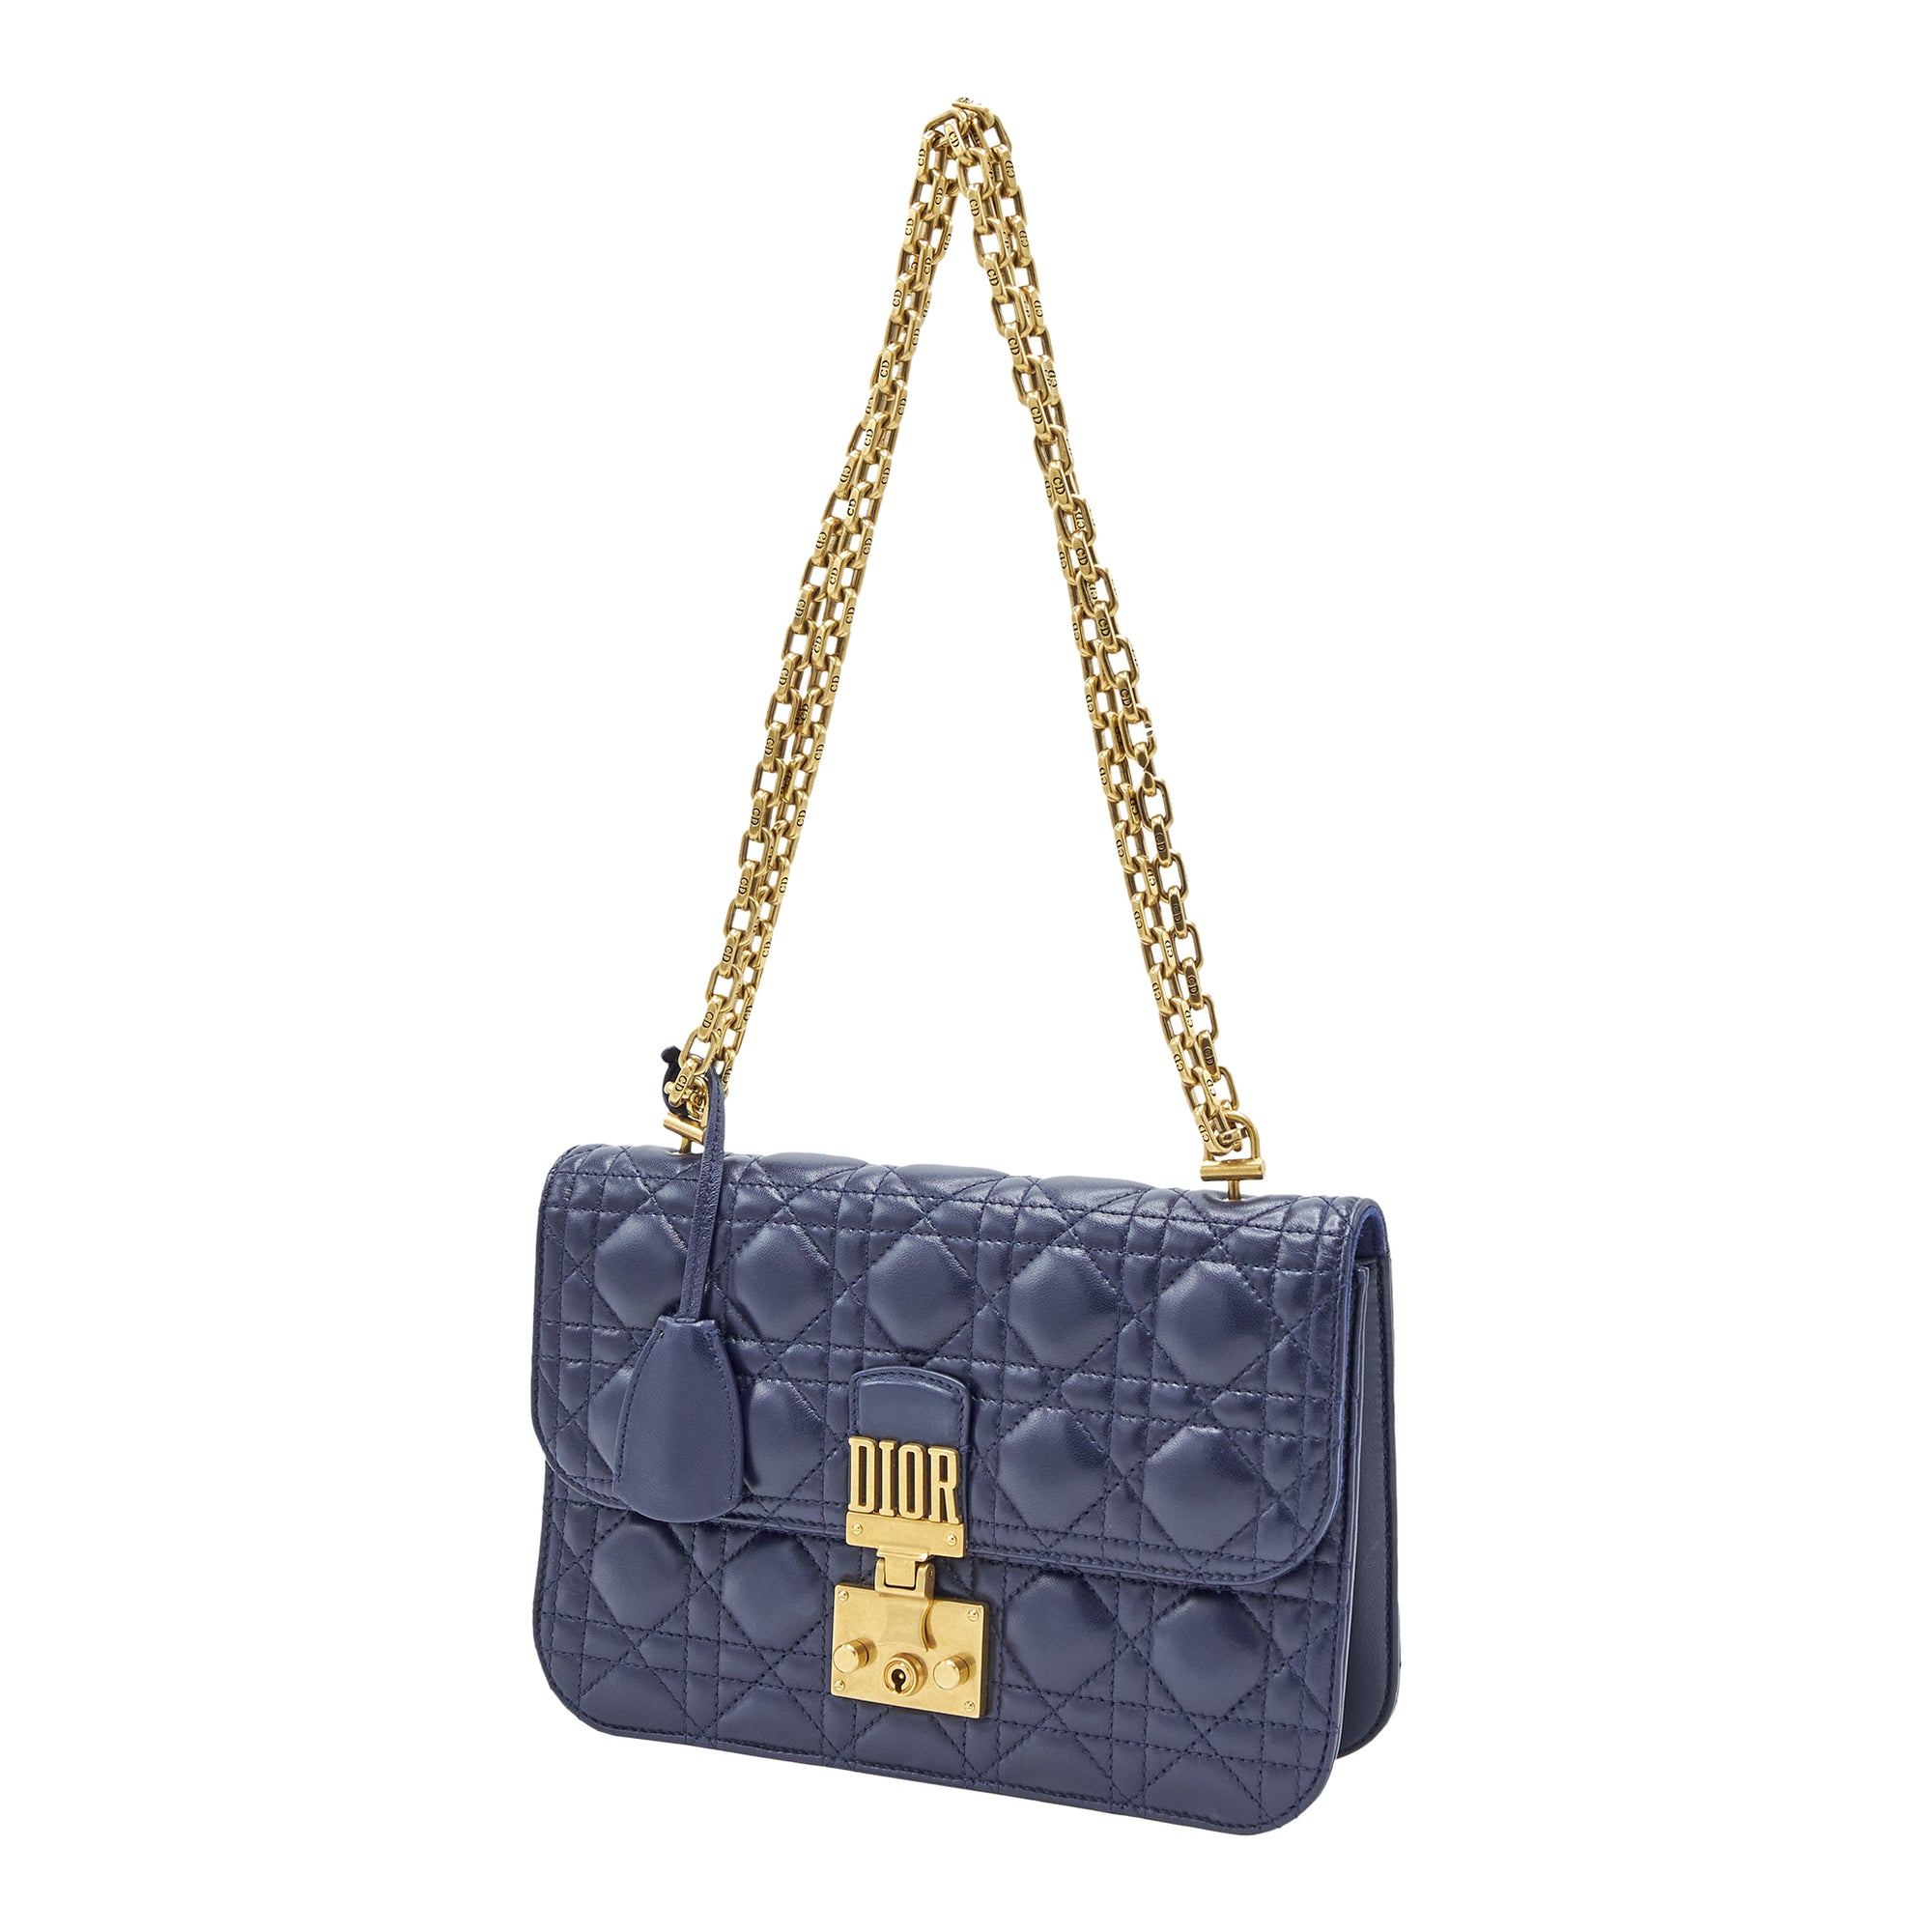 DiorAddict leather handbag